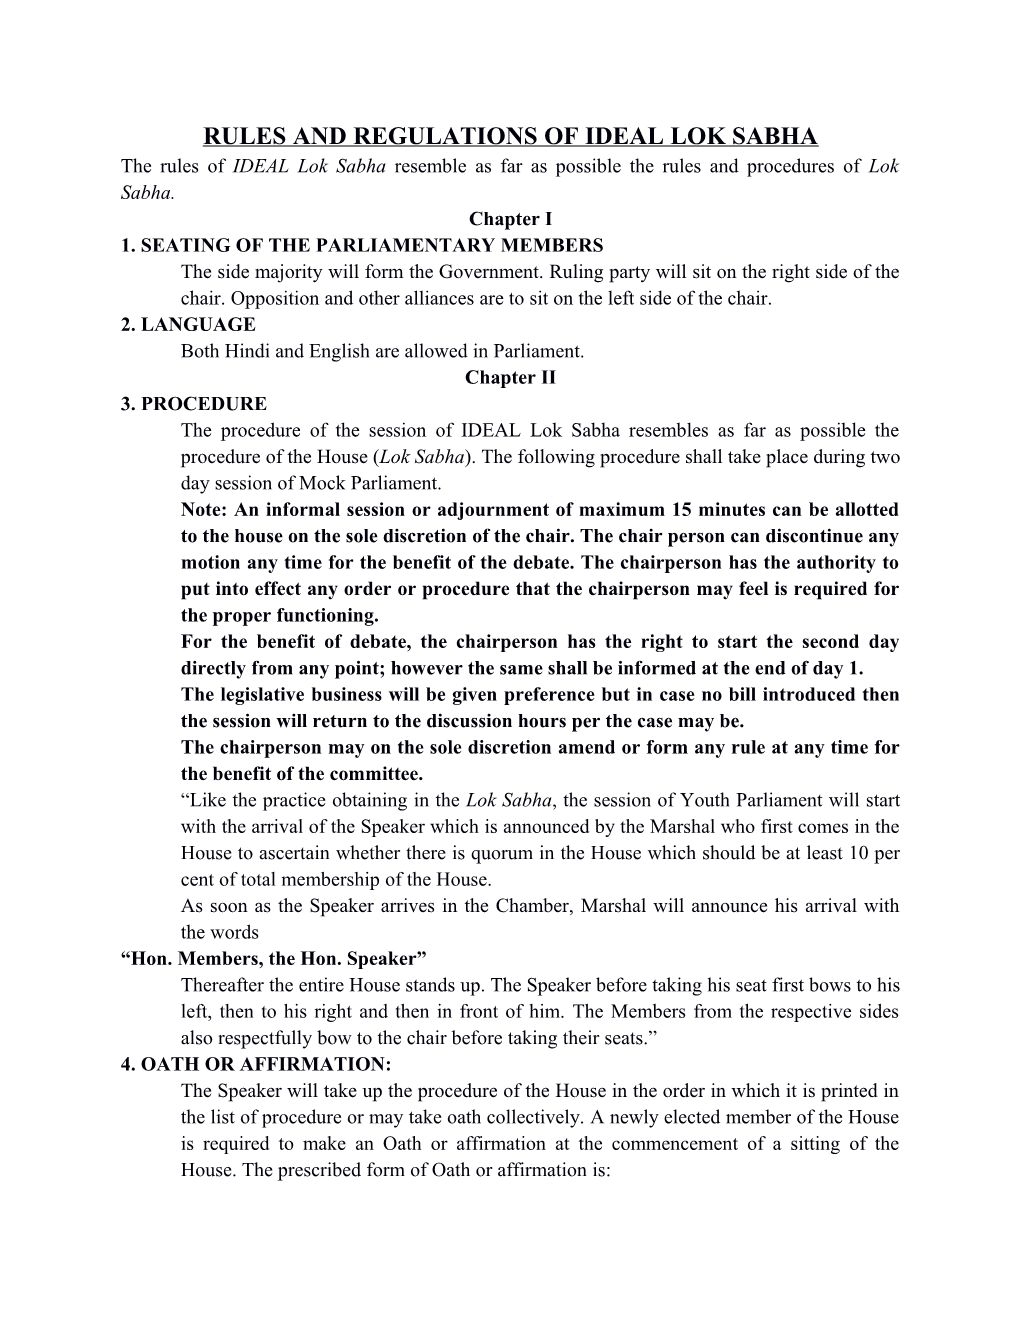 Rules and Regulations of Ideal Lok Sabha